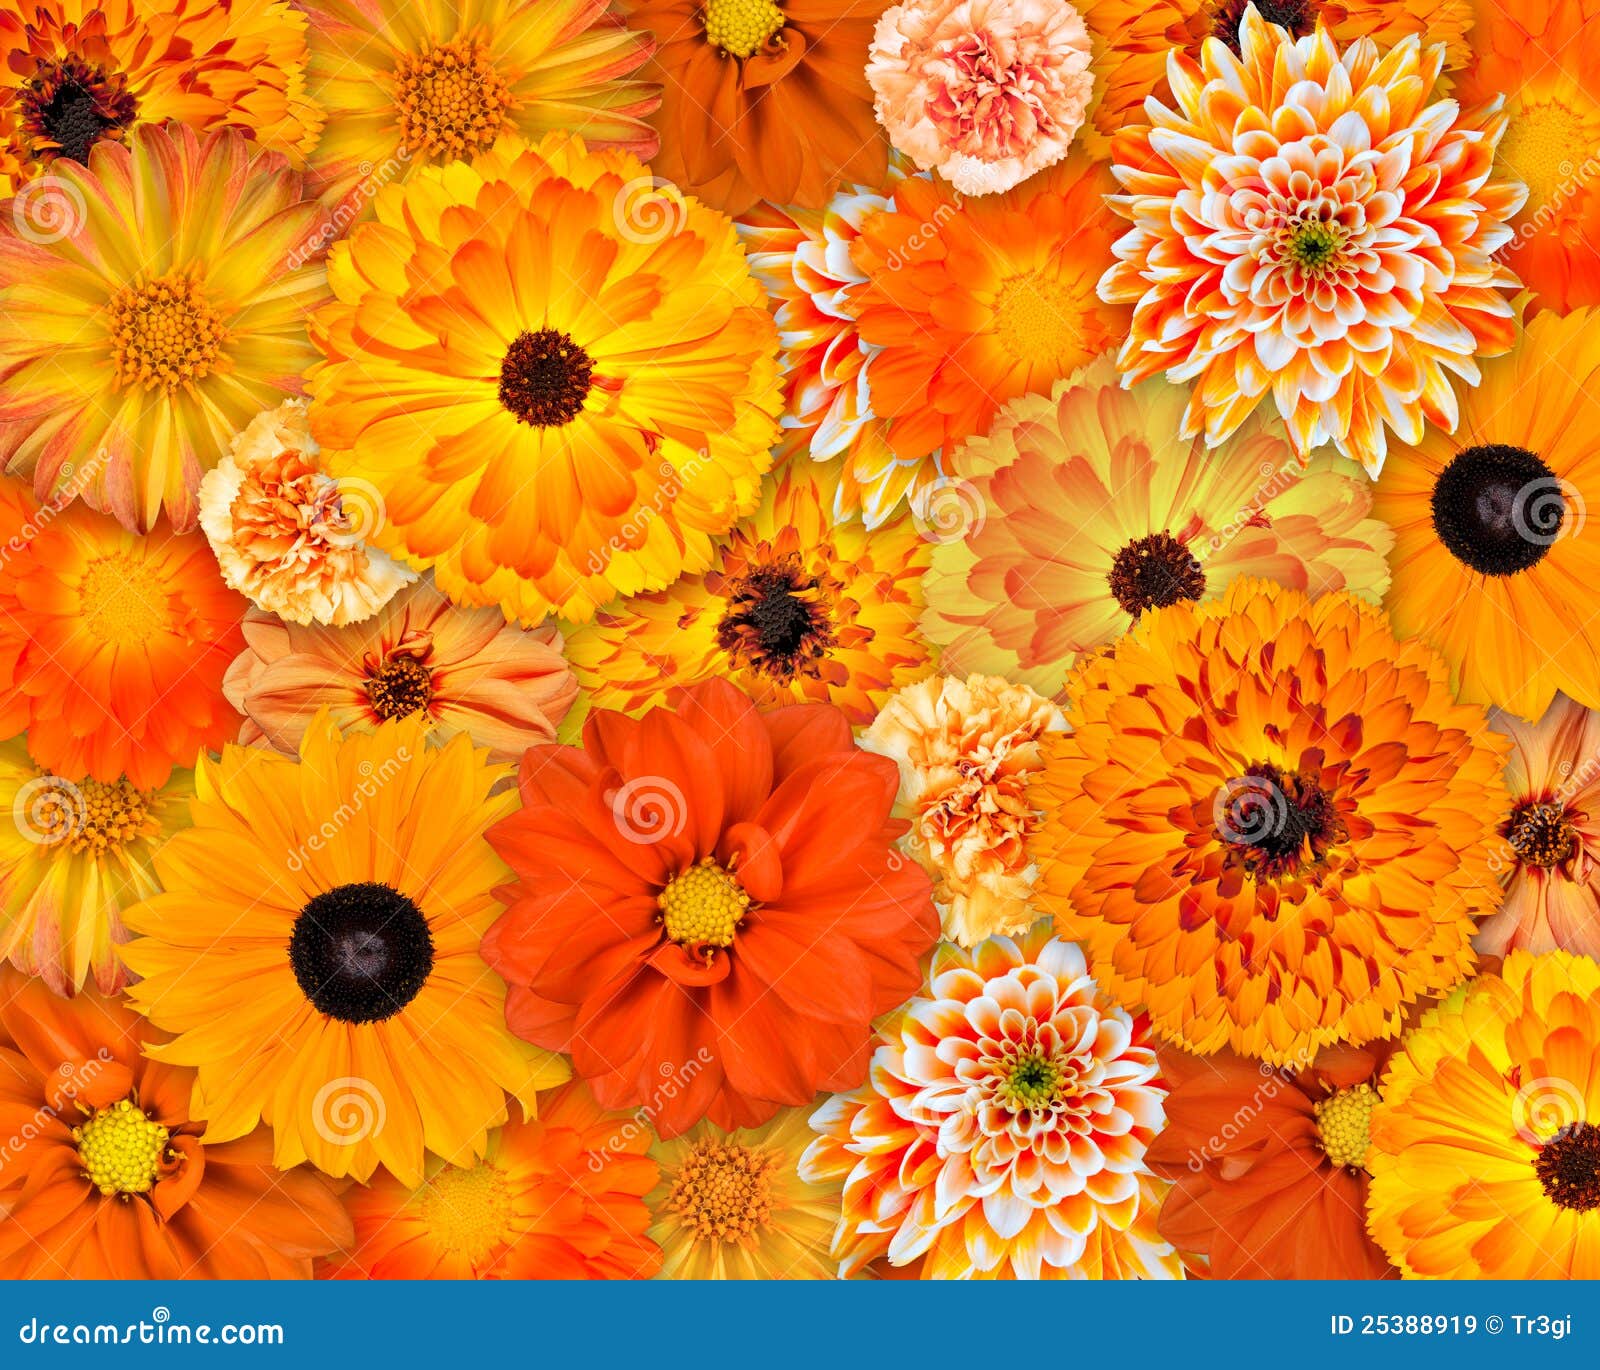 110 Flower Backgrounds - World of Printables